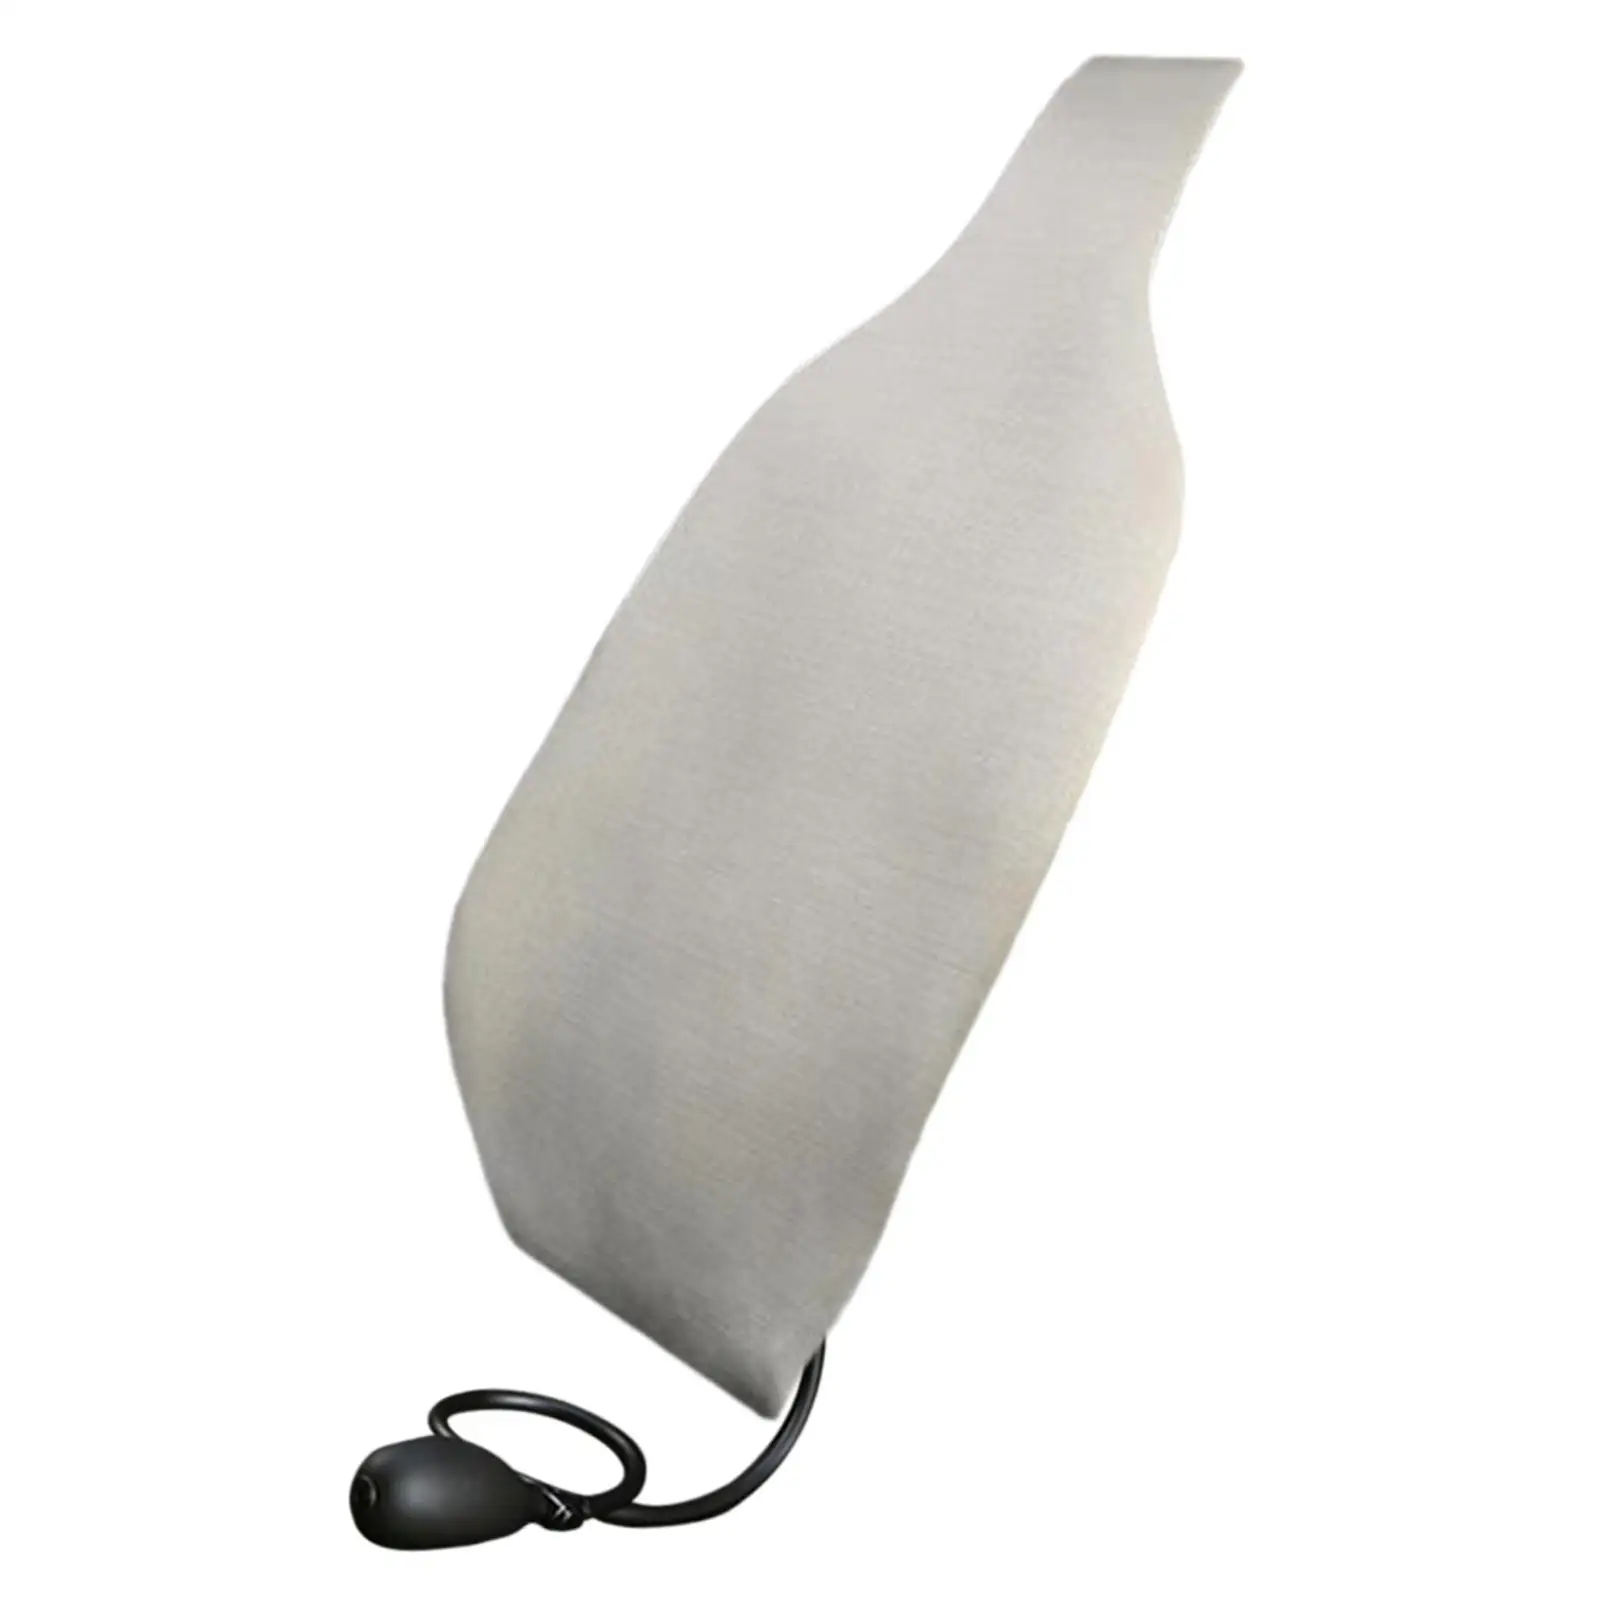 Car Support Cushion Back Cushion Ergonomic Design Anti Slip Easy to Install Motion Backrest for Long Sitting